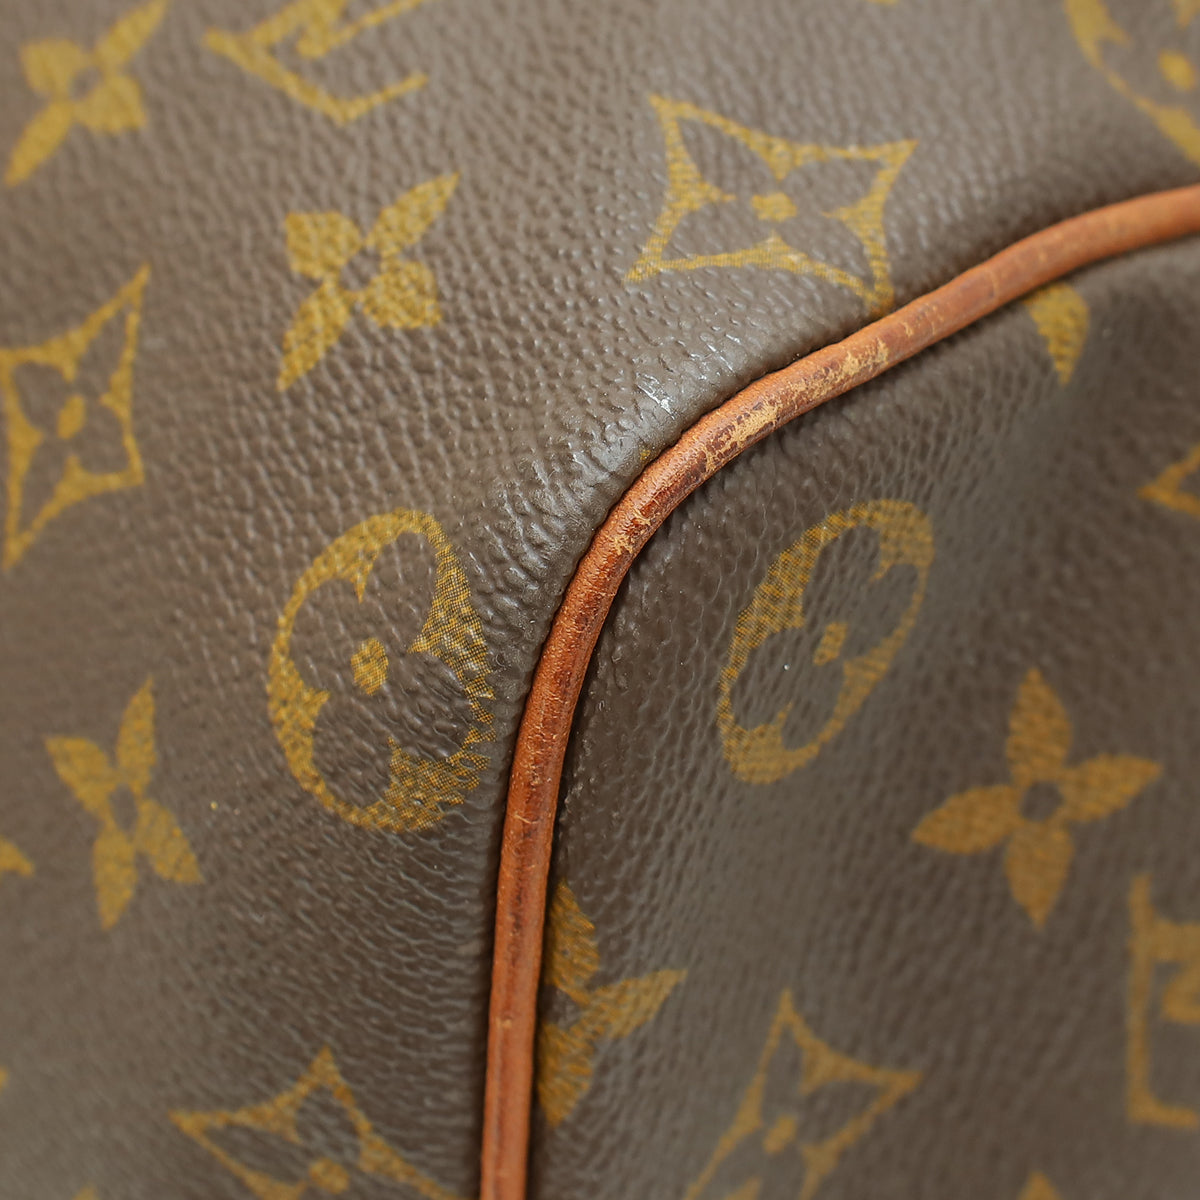 Louis Vuitton Brown Monogram Speedy 40 Bag